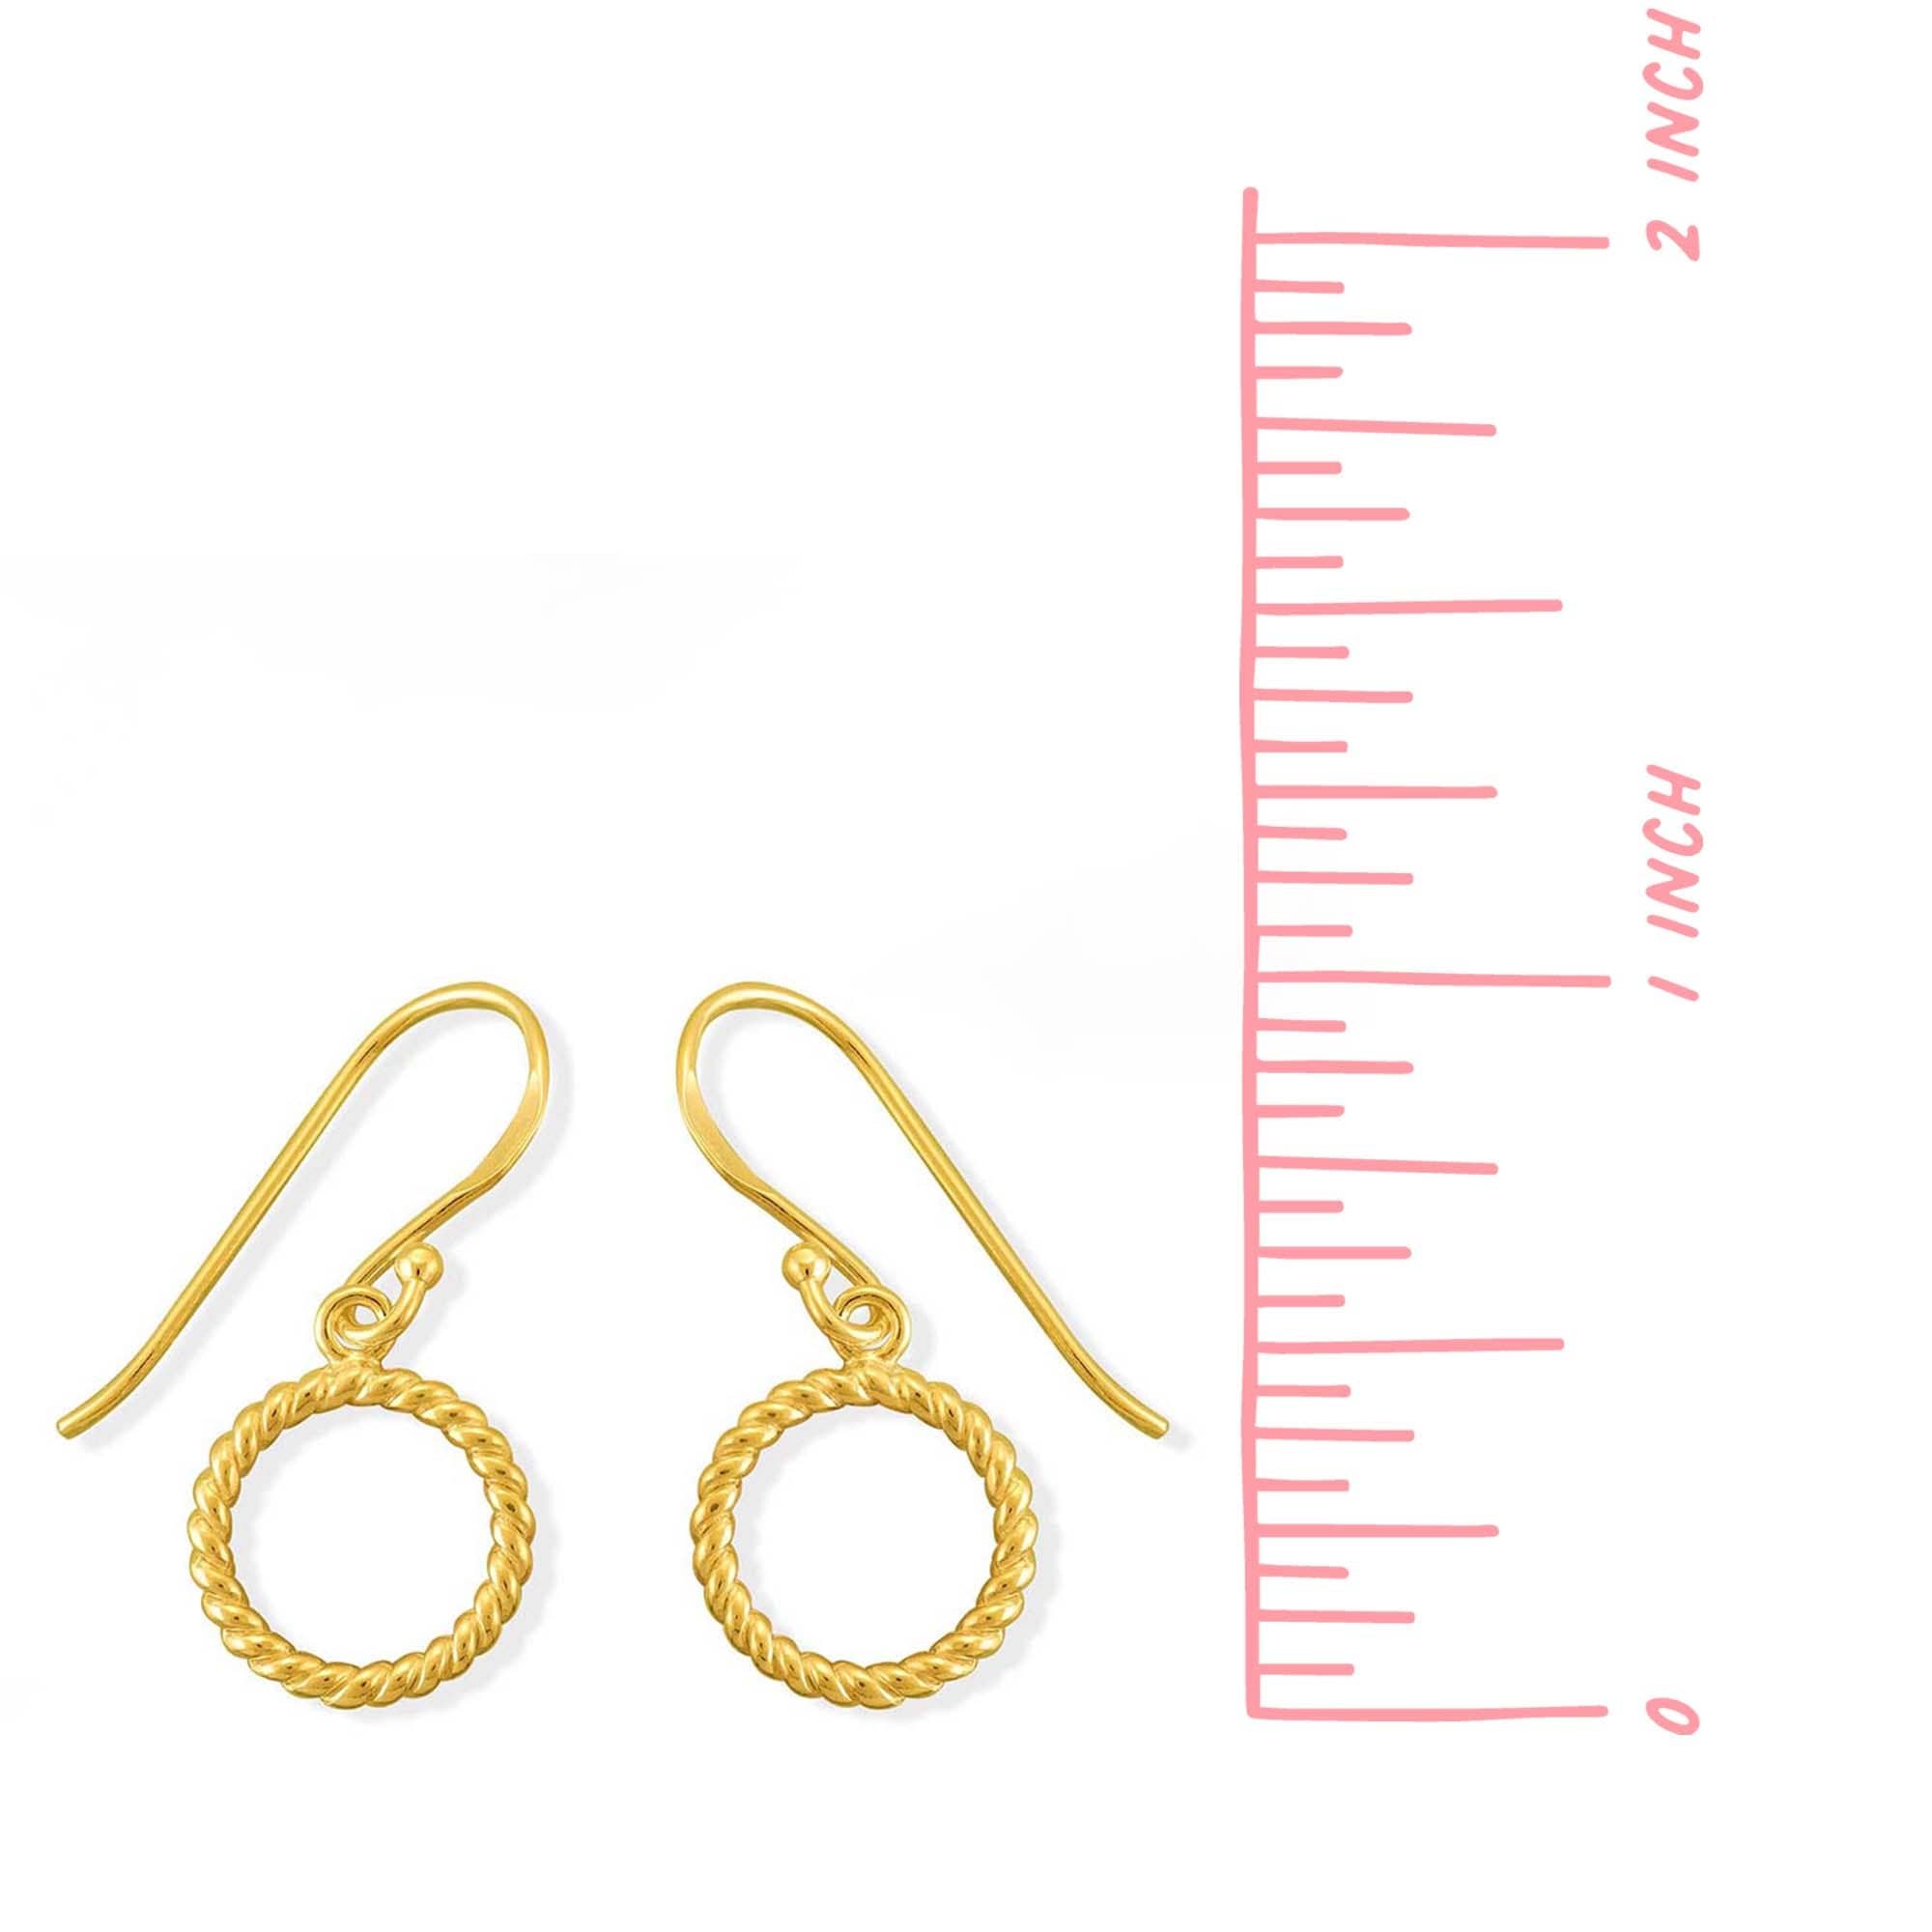 Boma Jewelry Earrings Rope Circle Dangles Earrings